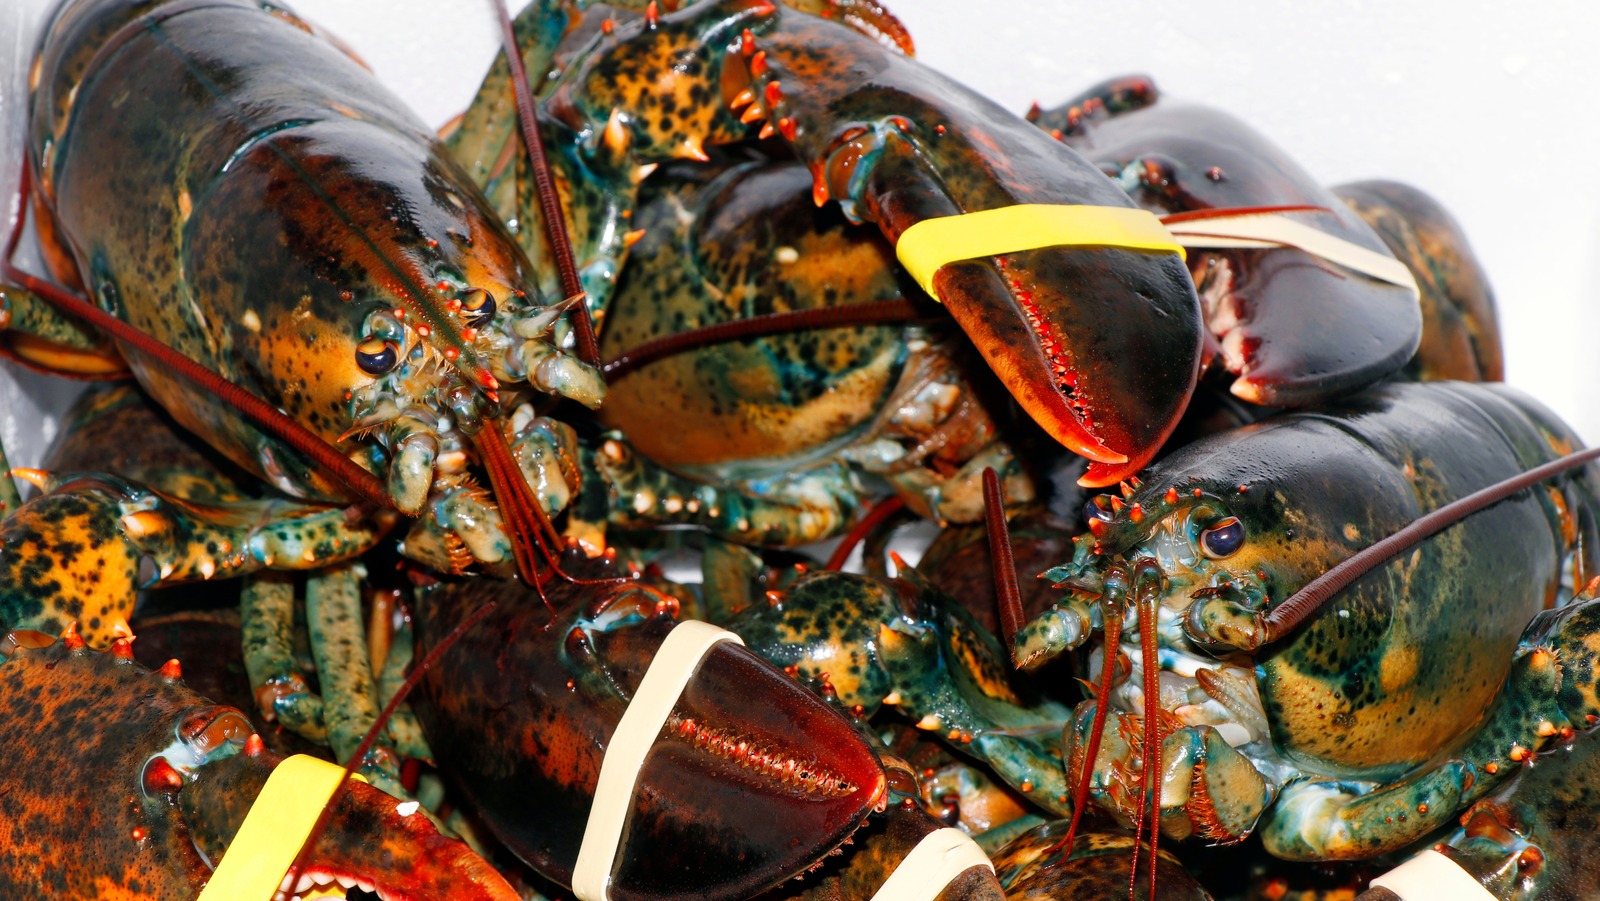 Lobster, Definition, Habitat, Diet, Species, & Facts